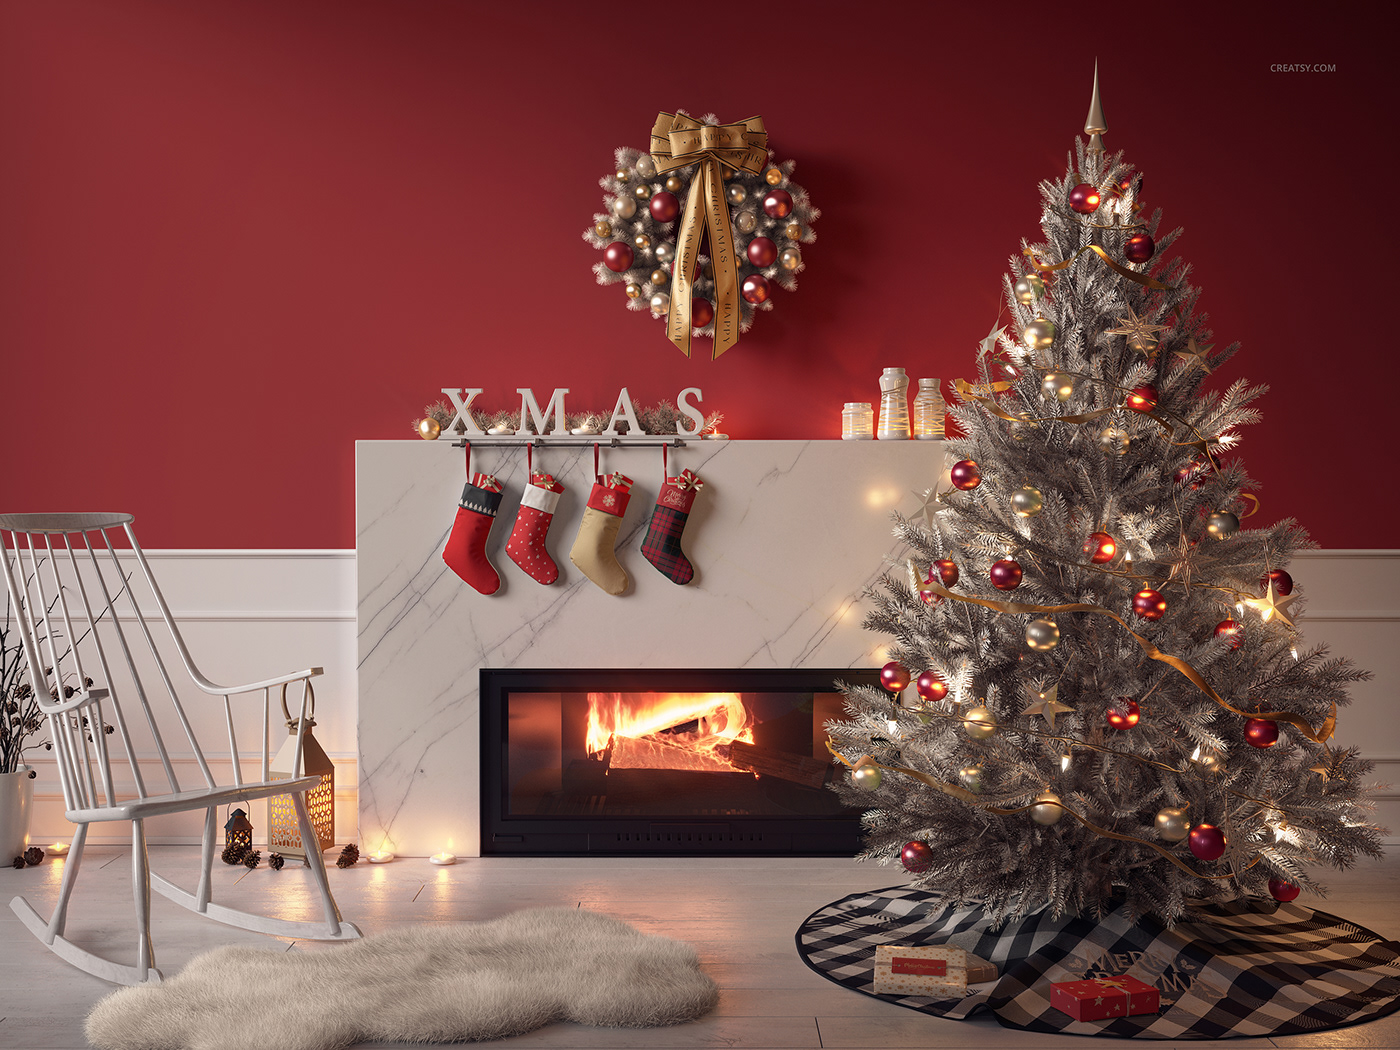 Tree  skirt creatsy Mockup Advertising  xmas baubles Christmas Presents Packaging